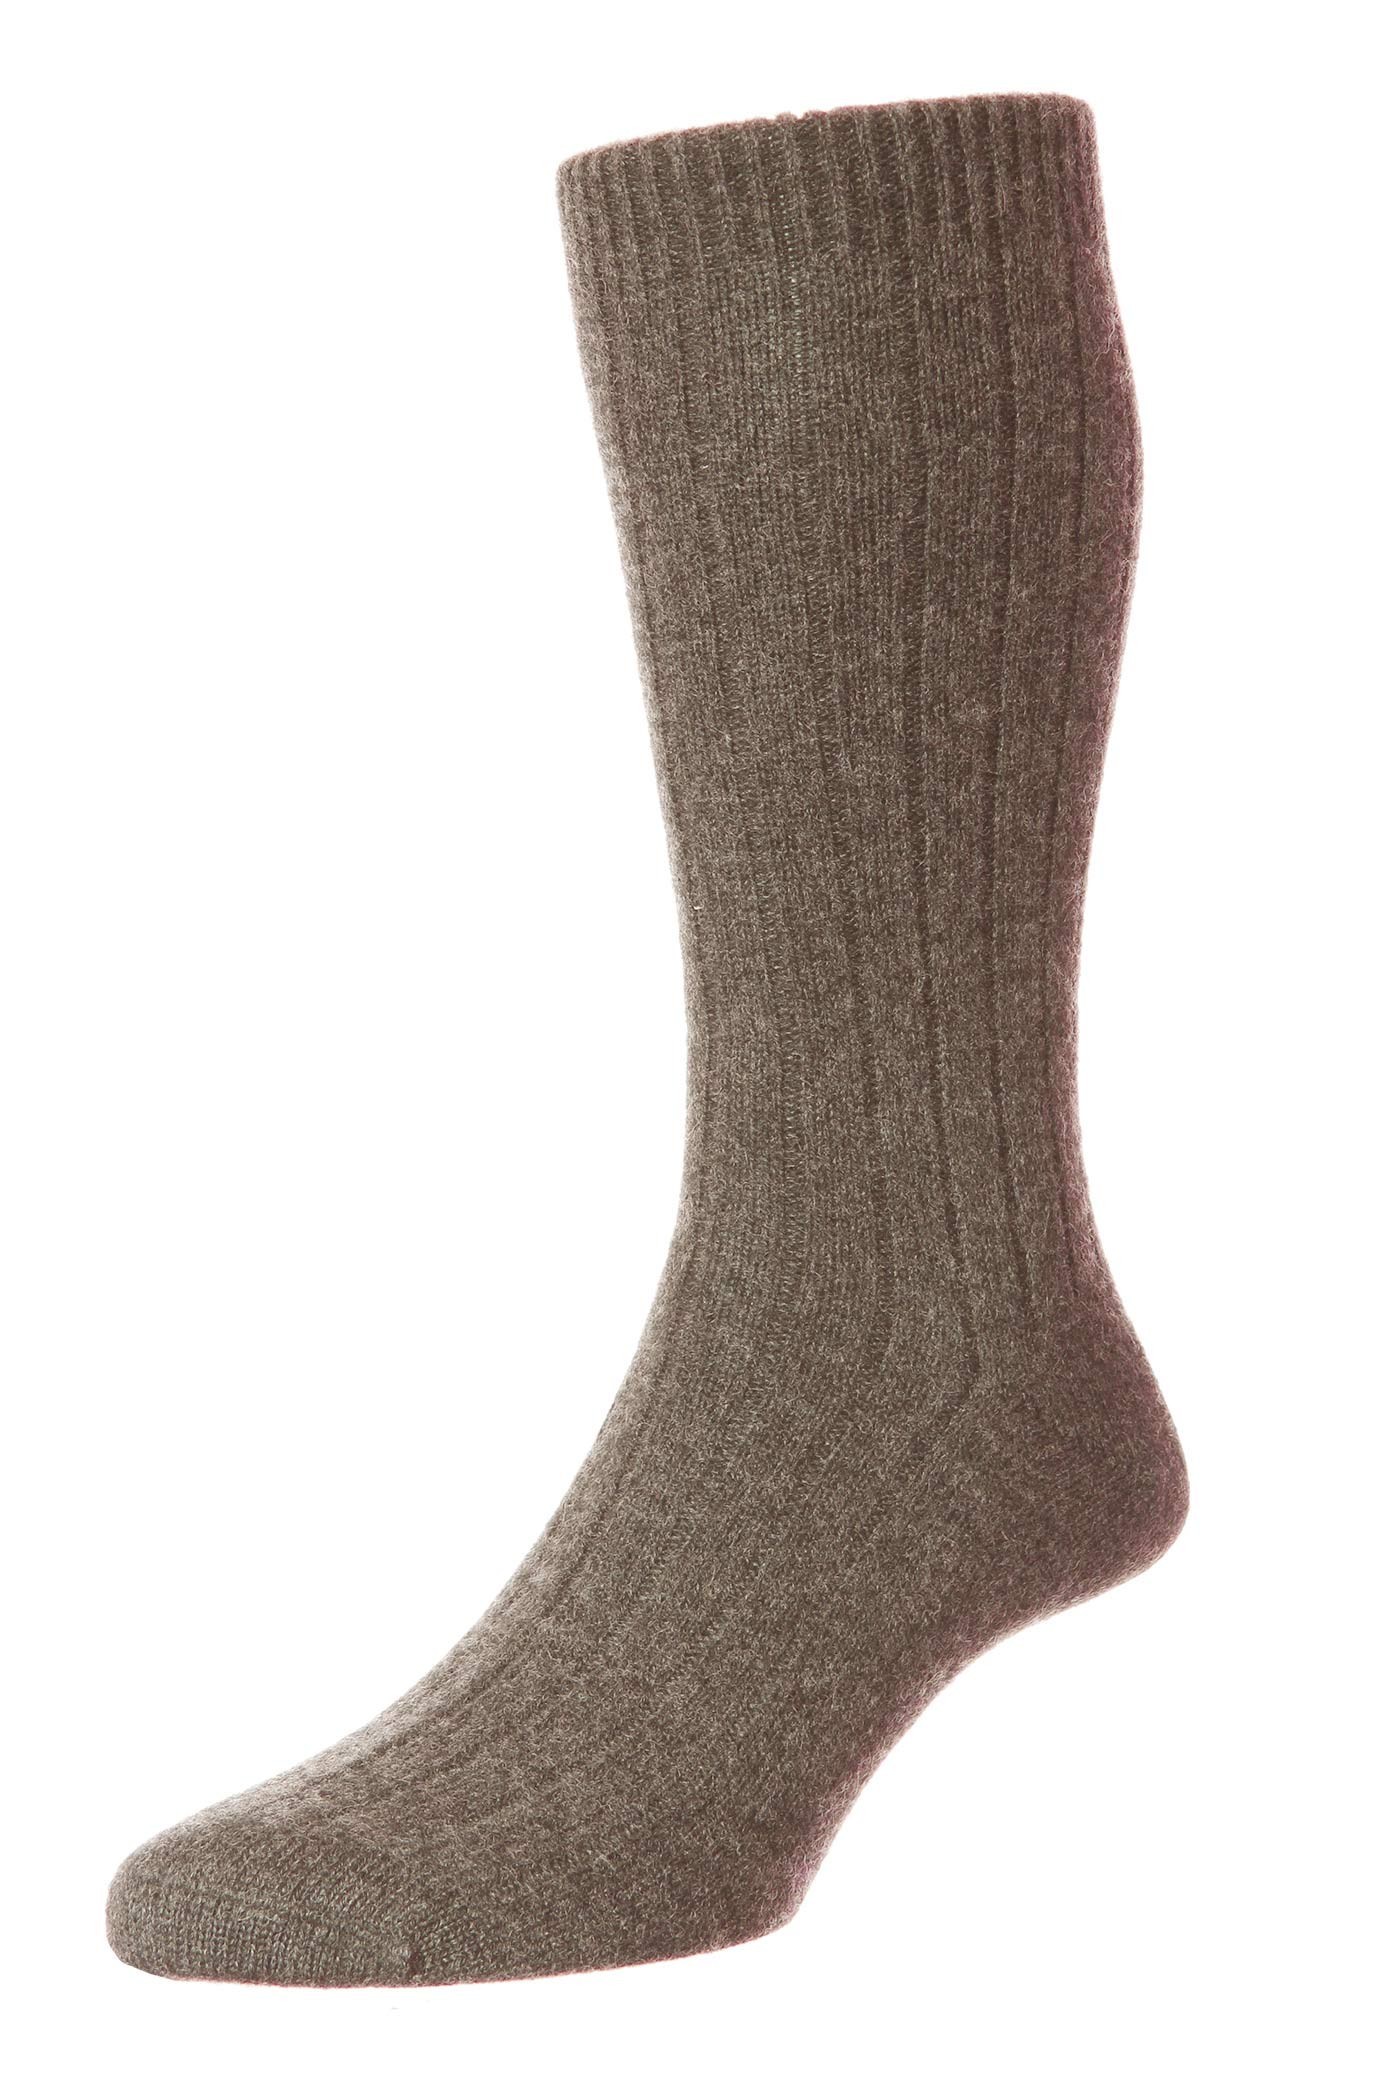 Pantherella Men's Waddington Cashmere Socks - Mink Melange - Medium